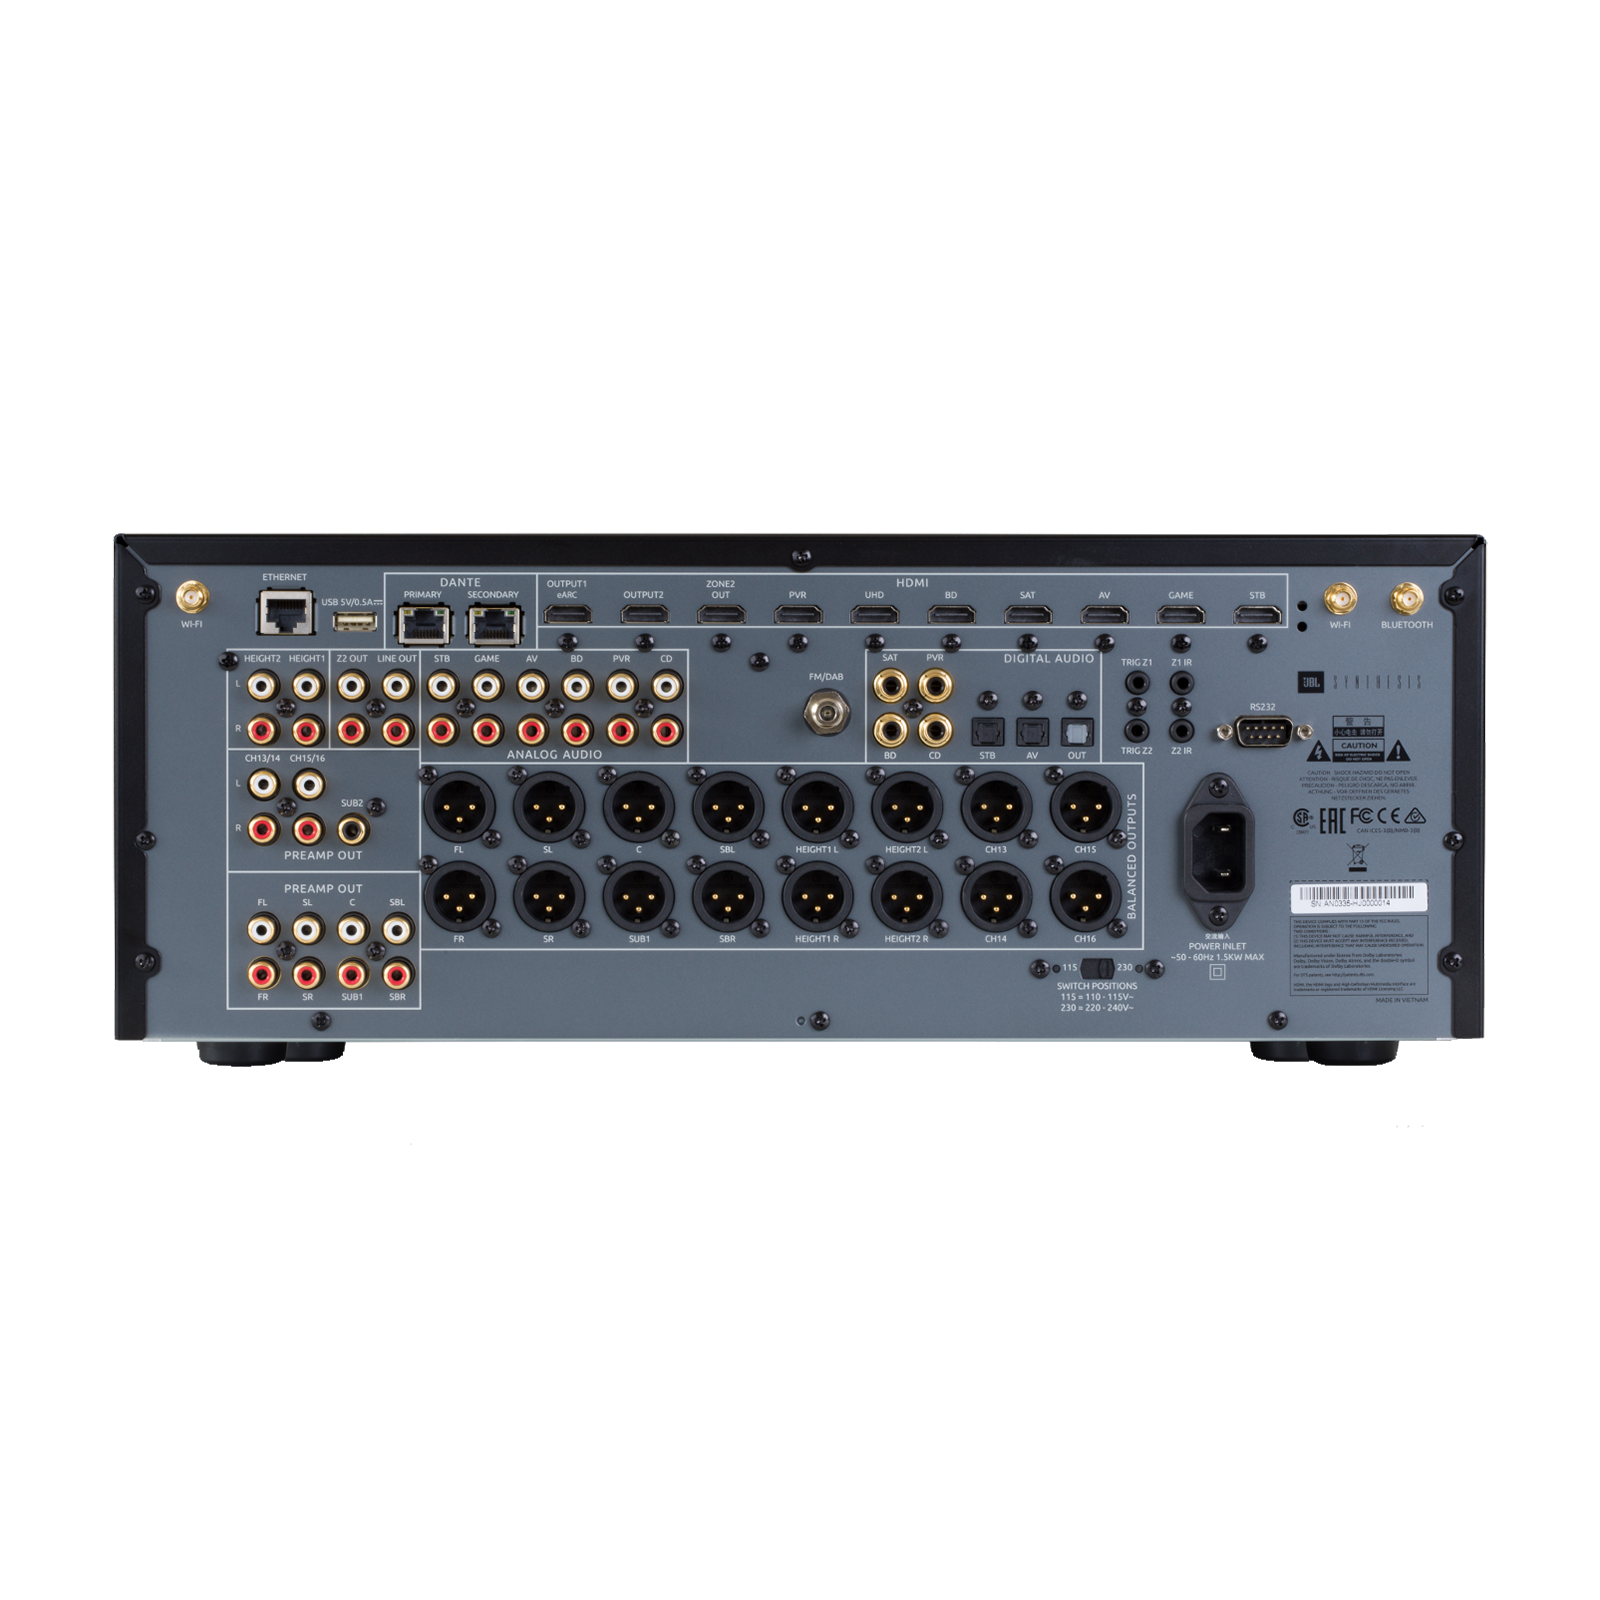 SDP-55 - Black - 16-channel Immersive Surround Sound AV Preamplifier - Back